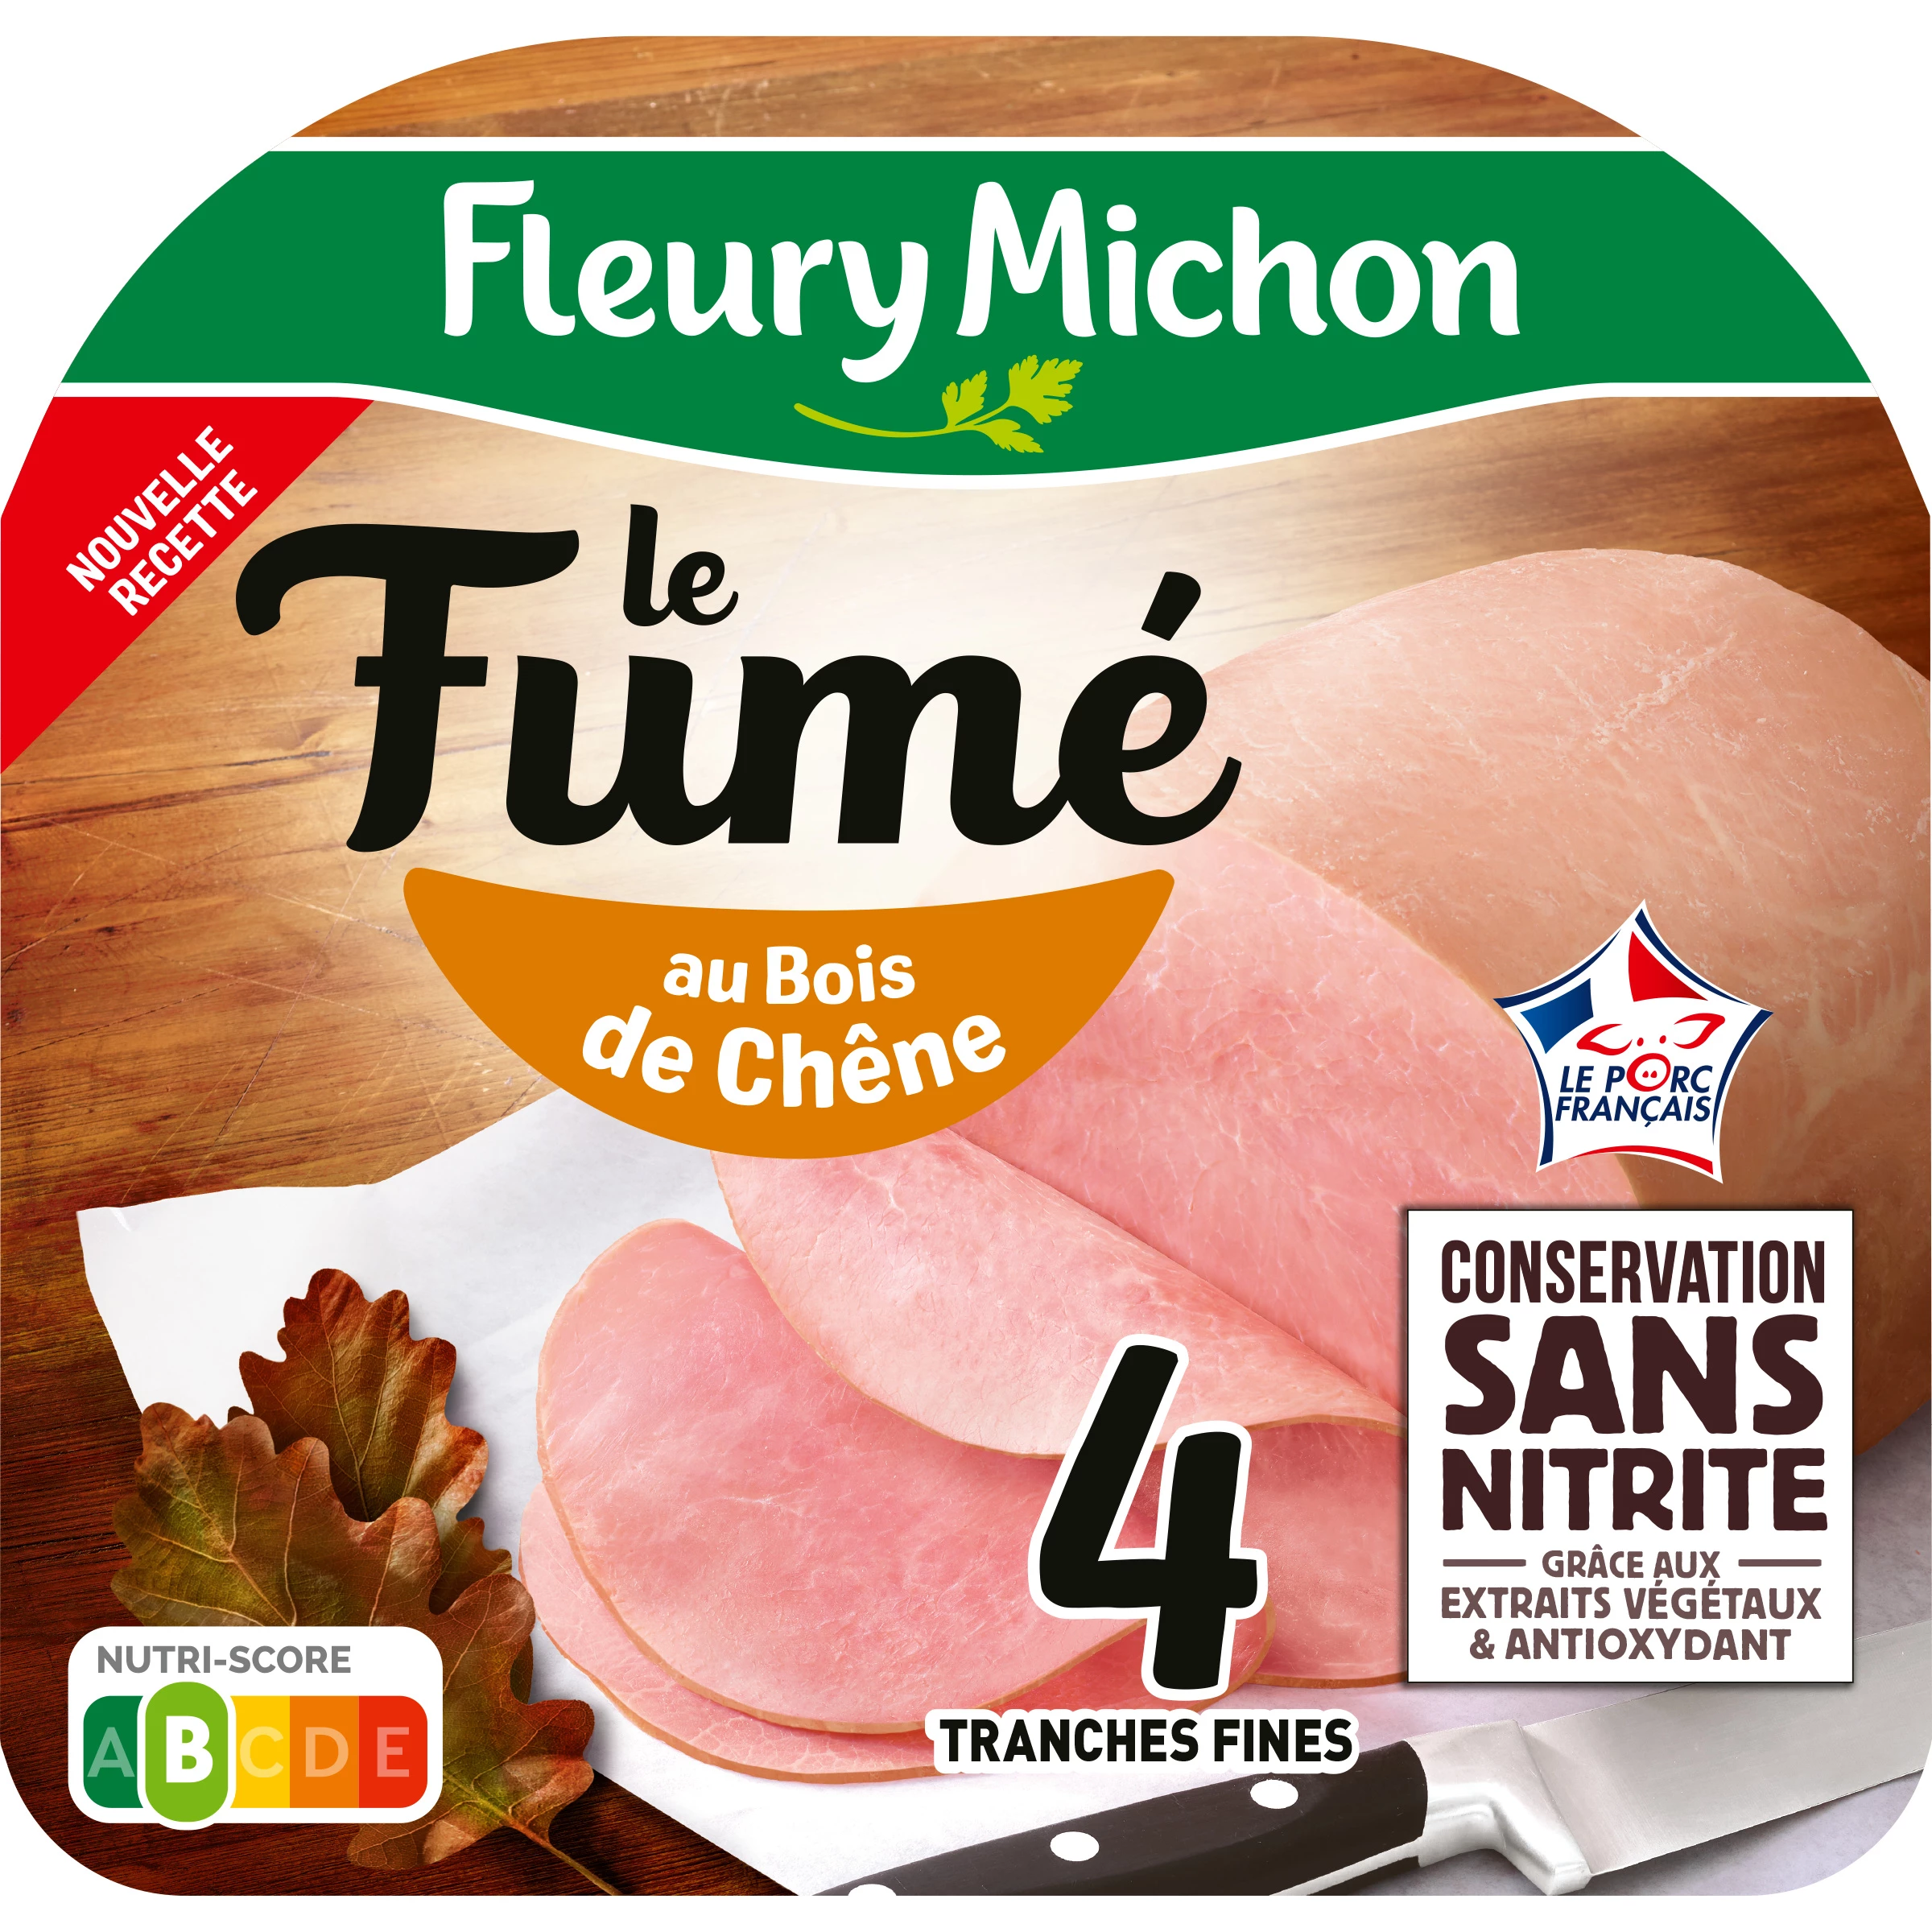 Smoked ham without nitrite - FLEURY MICHON